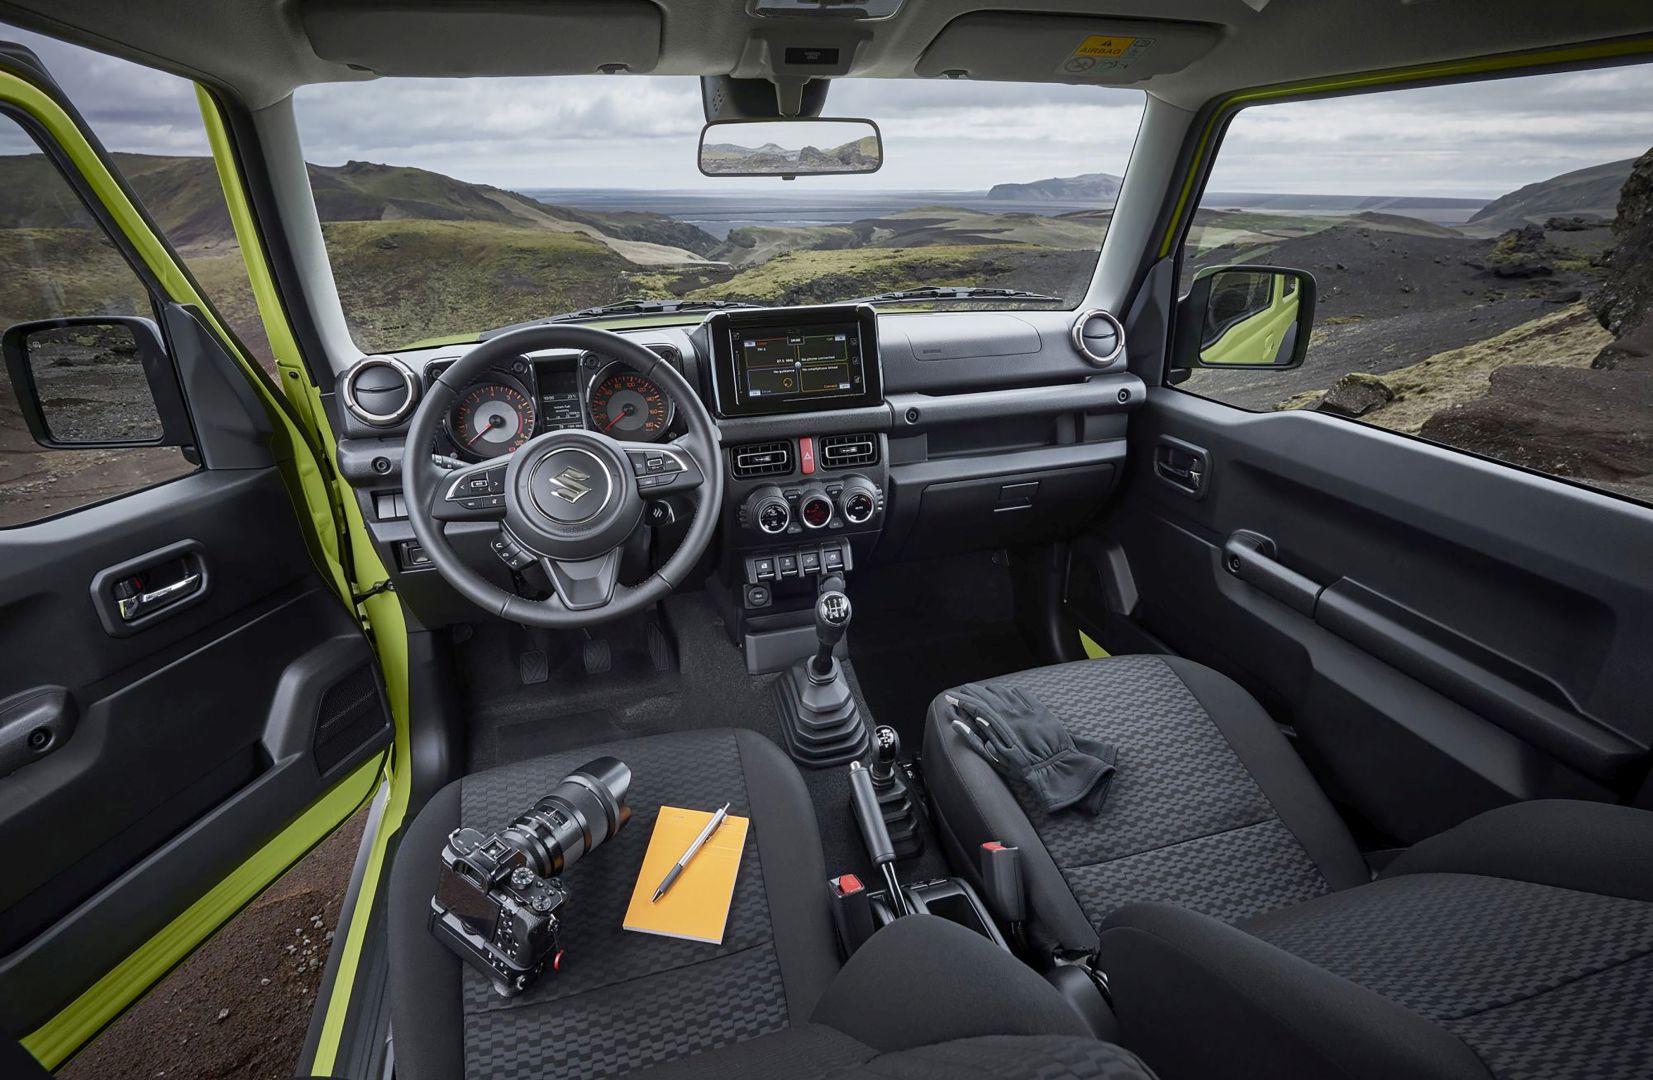 Suzuki Jimny Electric 4x4 Imagined With Three- and Five-Door Options -  autoevolution